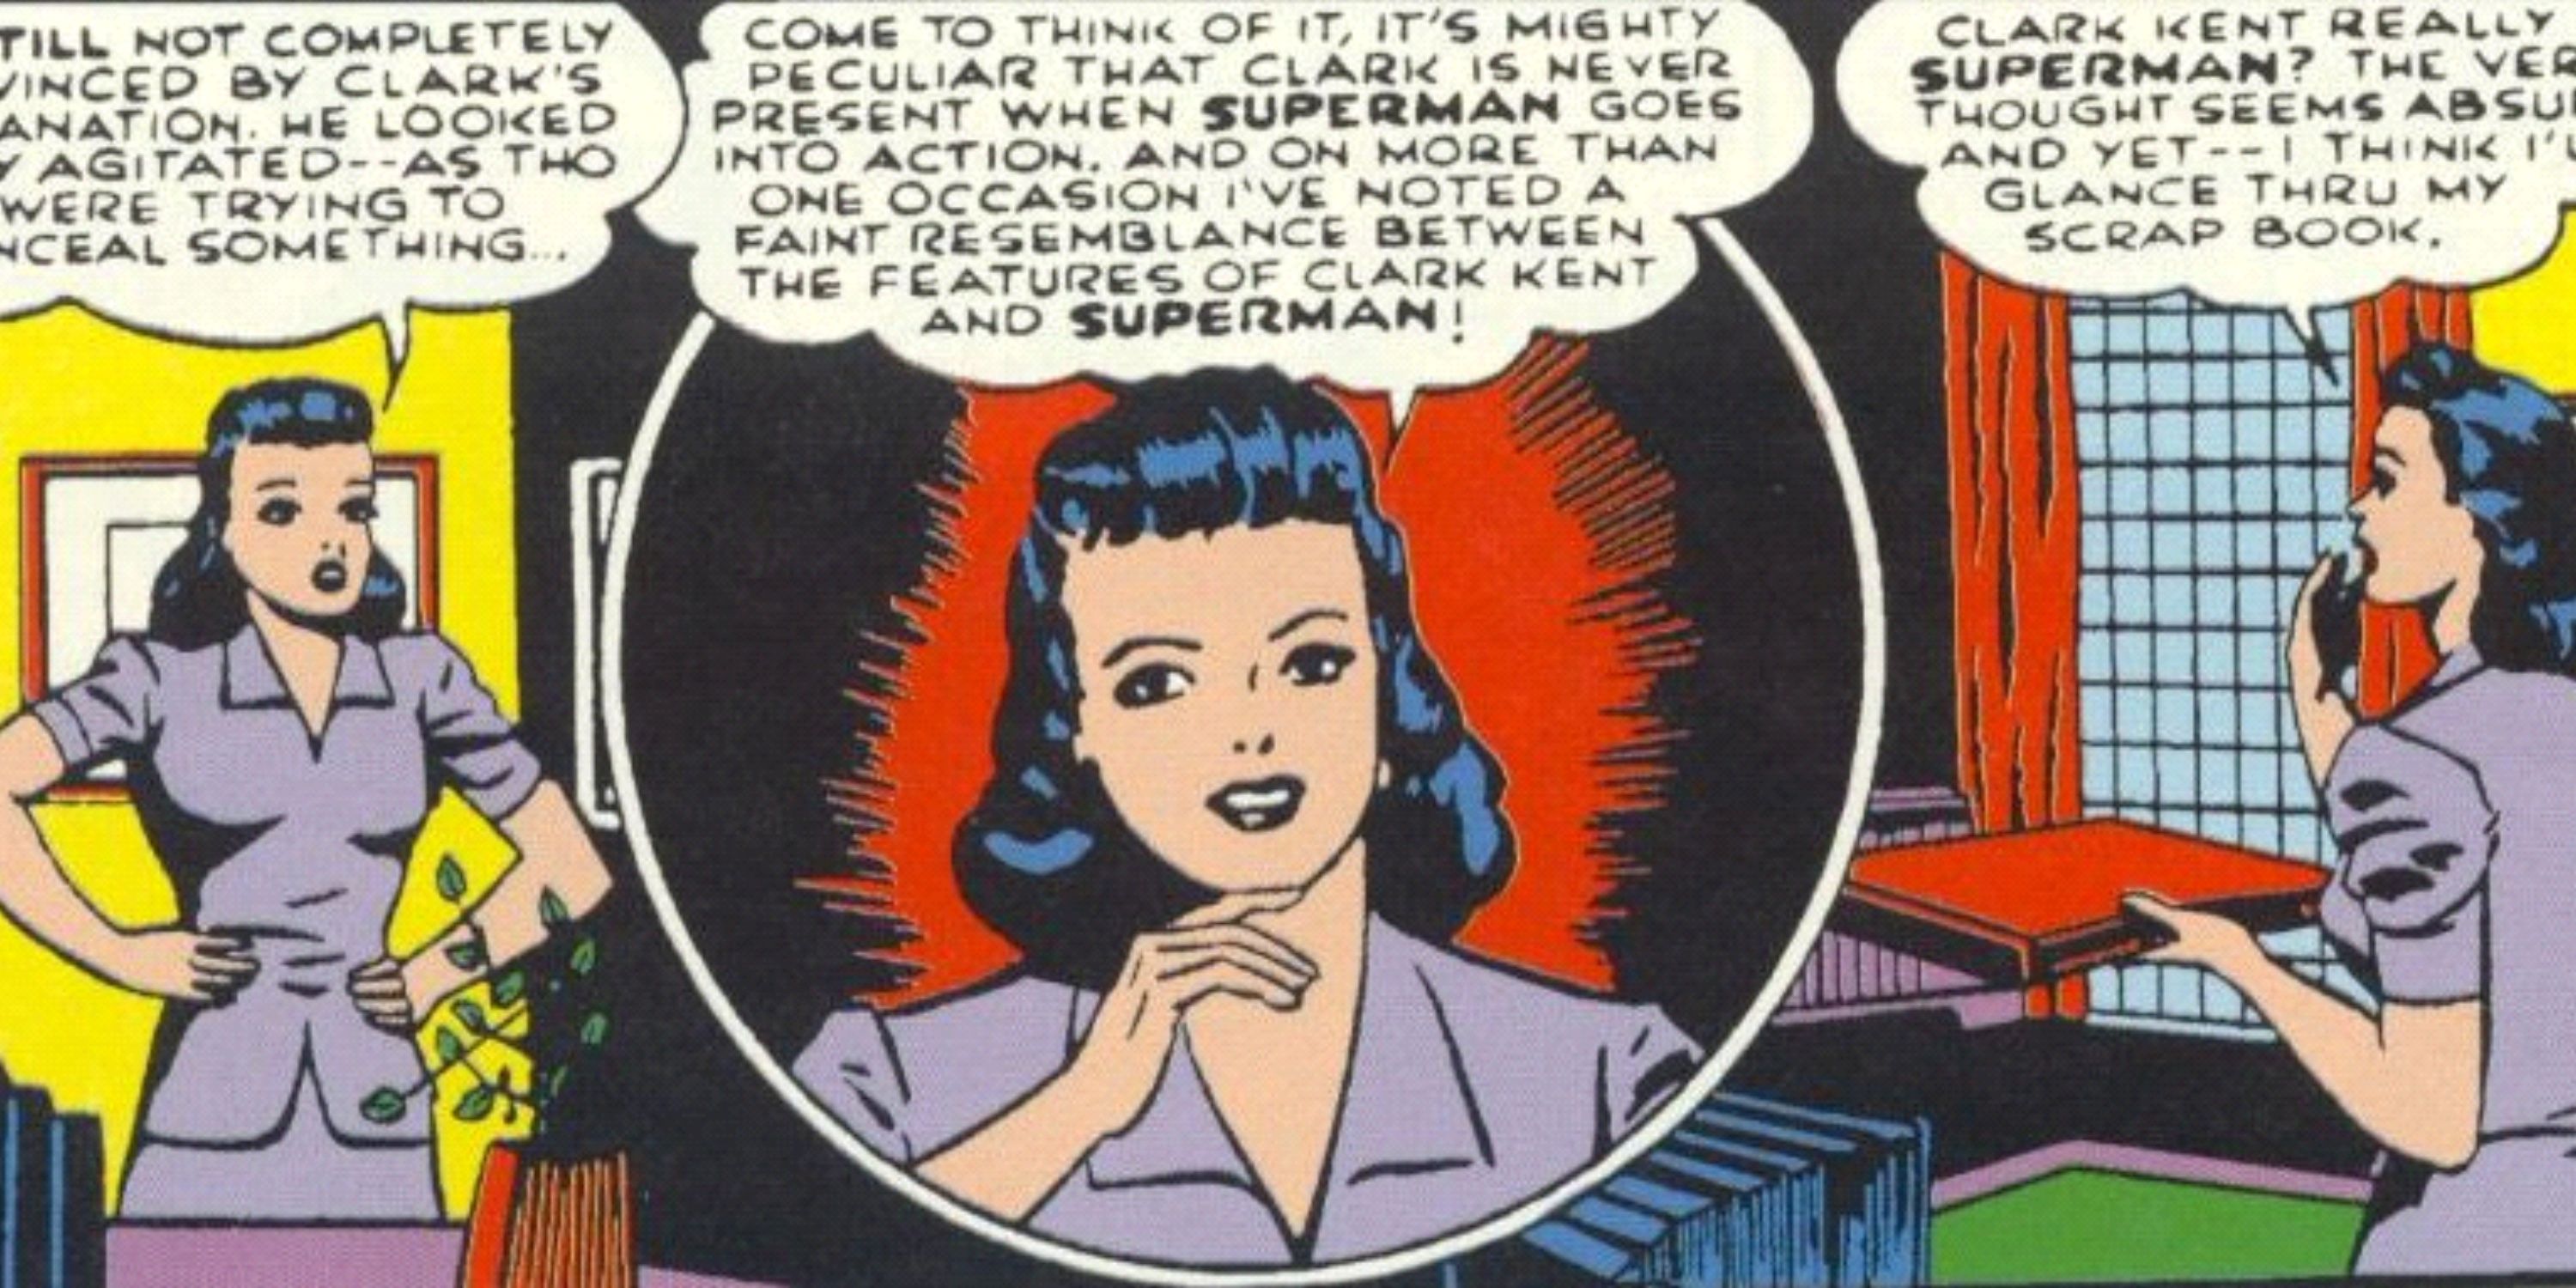 Lois Lane falando sobre se Clark Kent é o Superman